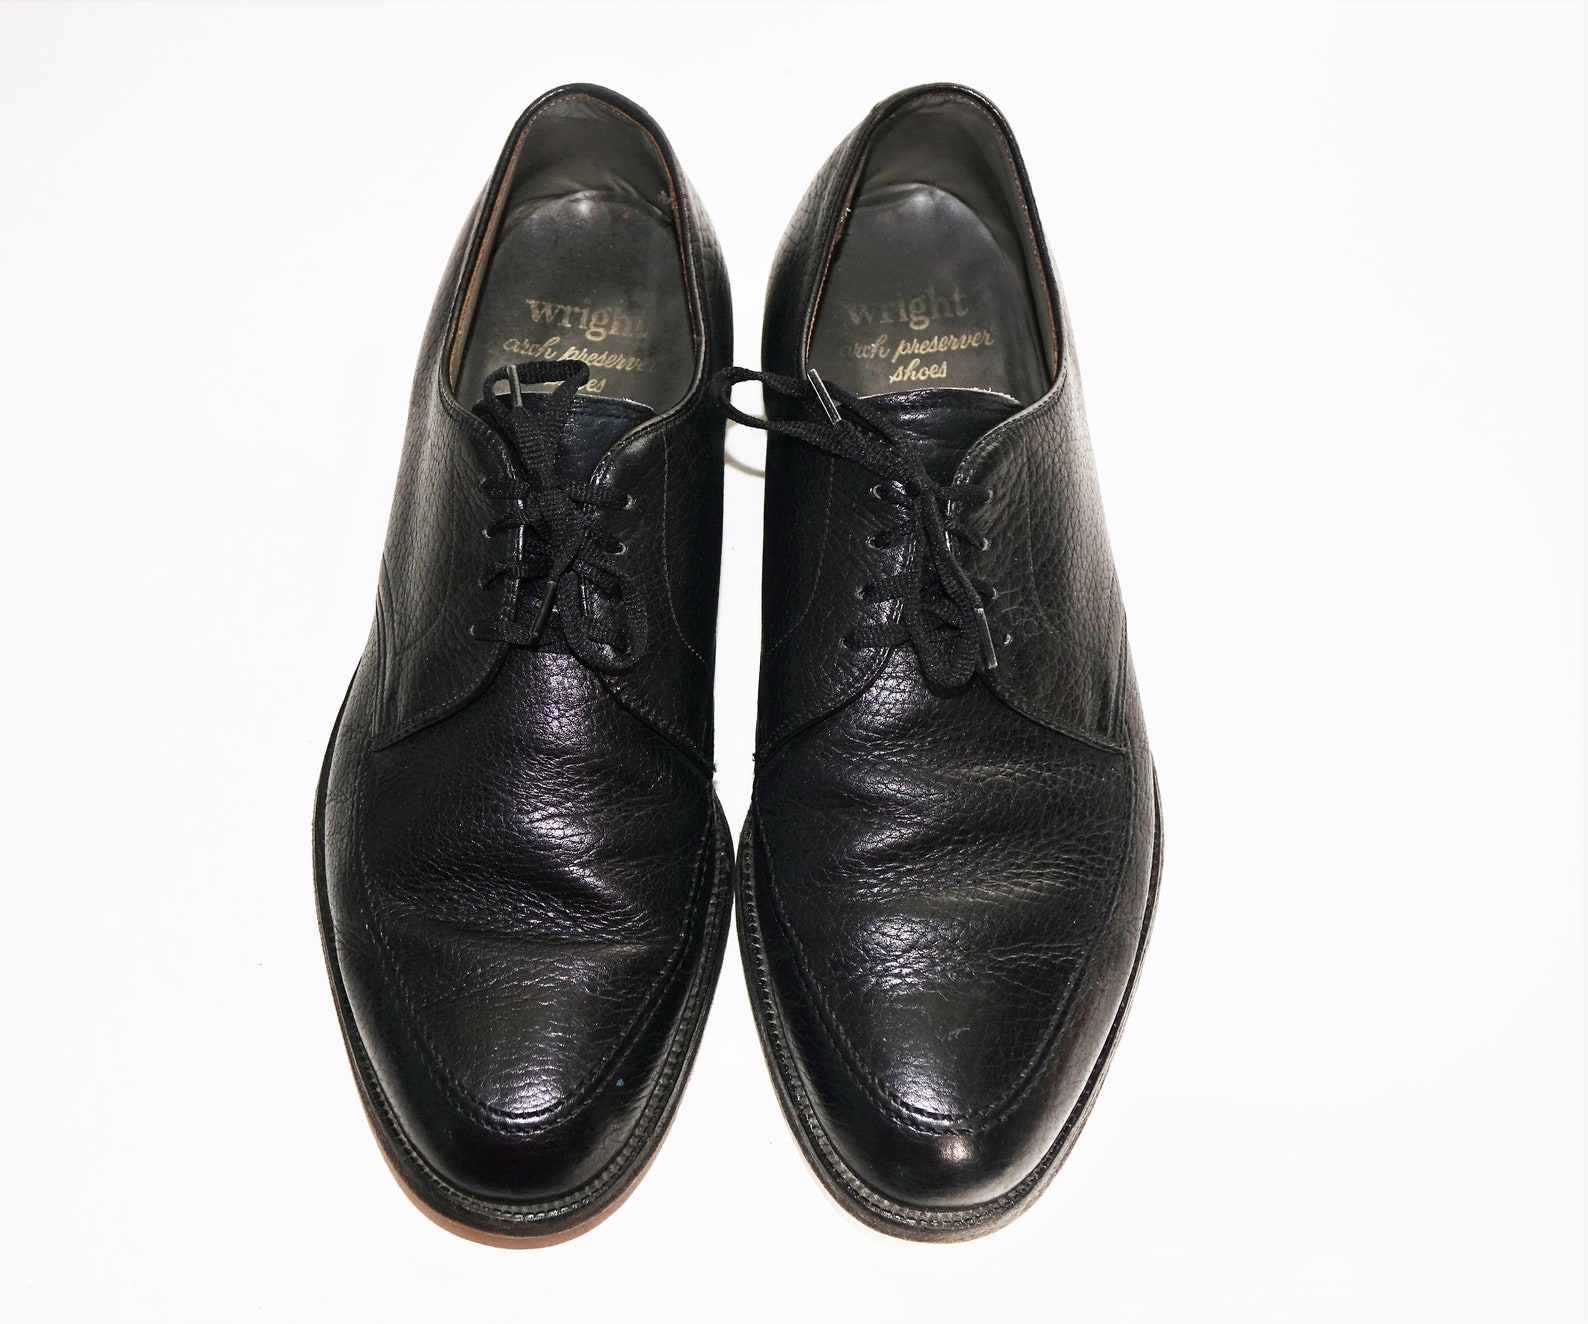 Vintage E T Wright Shoes Men's Size 9.5 E Black Leather - Etsy